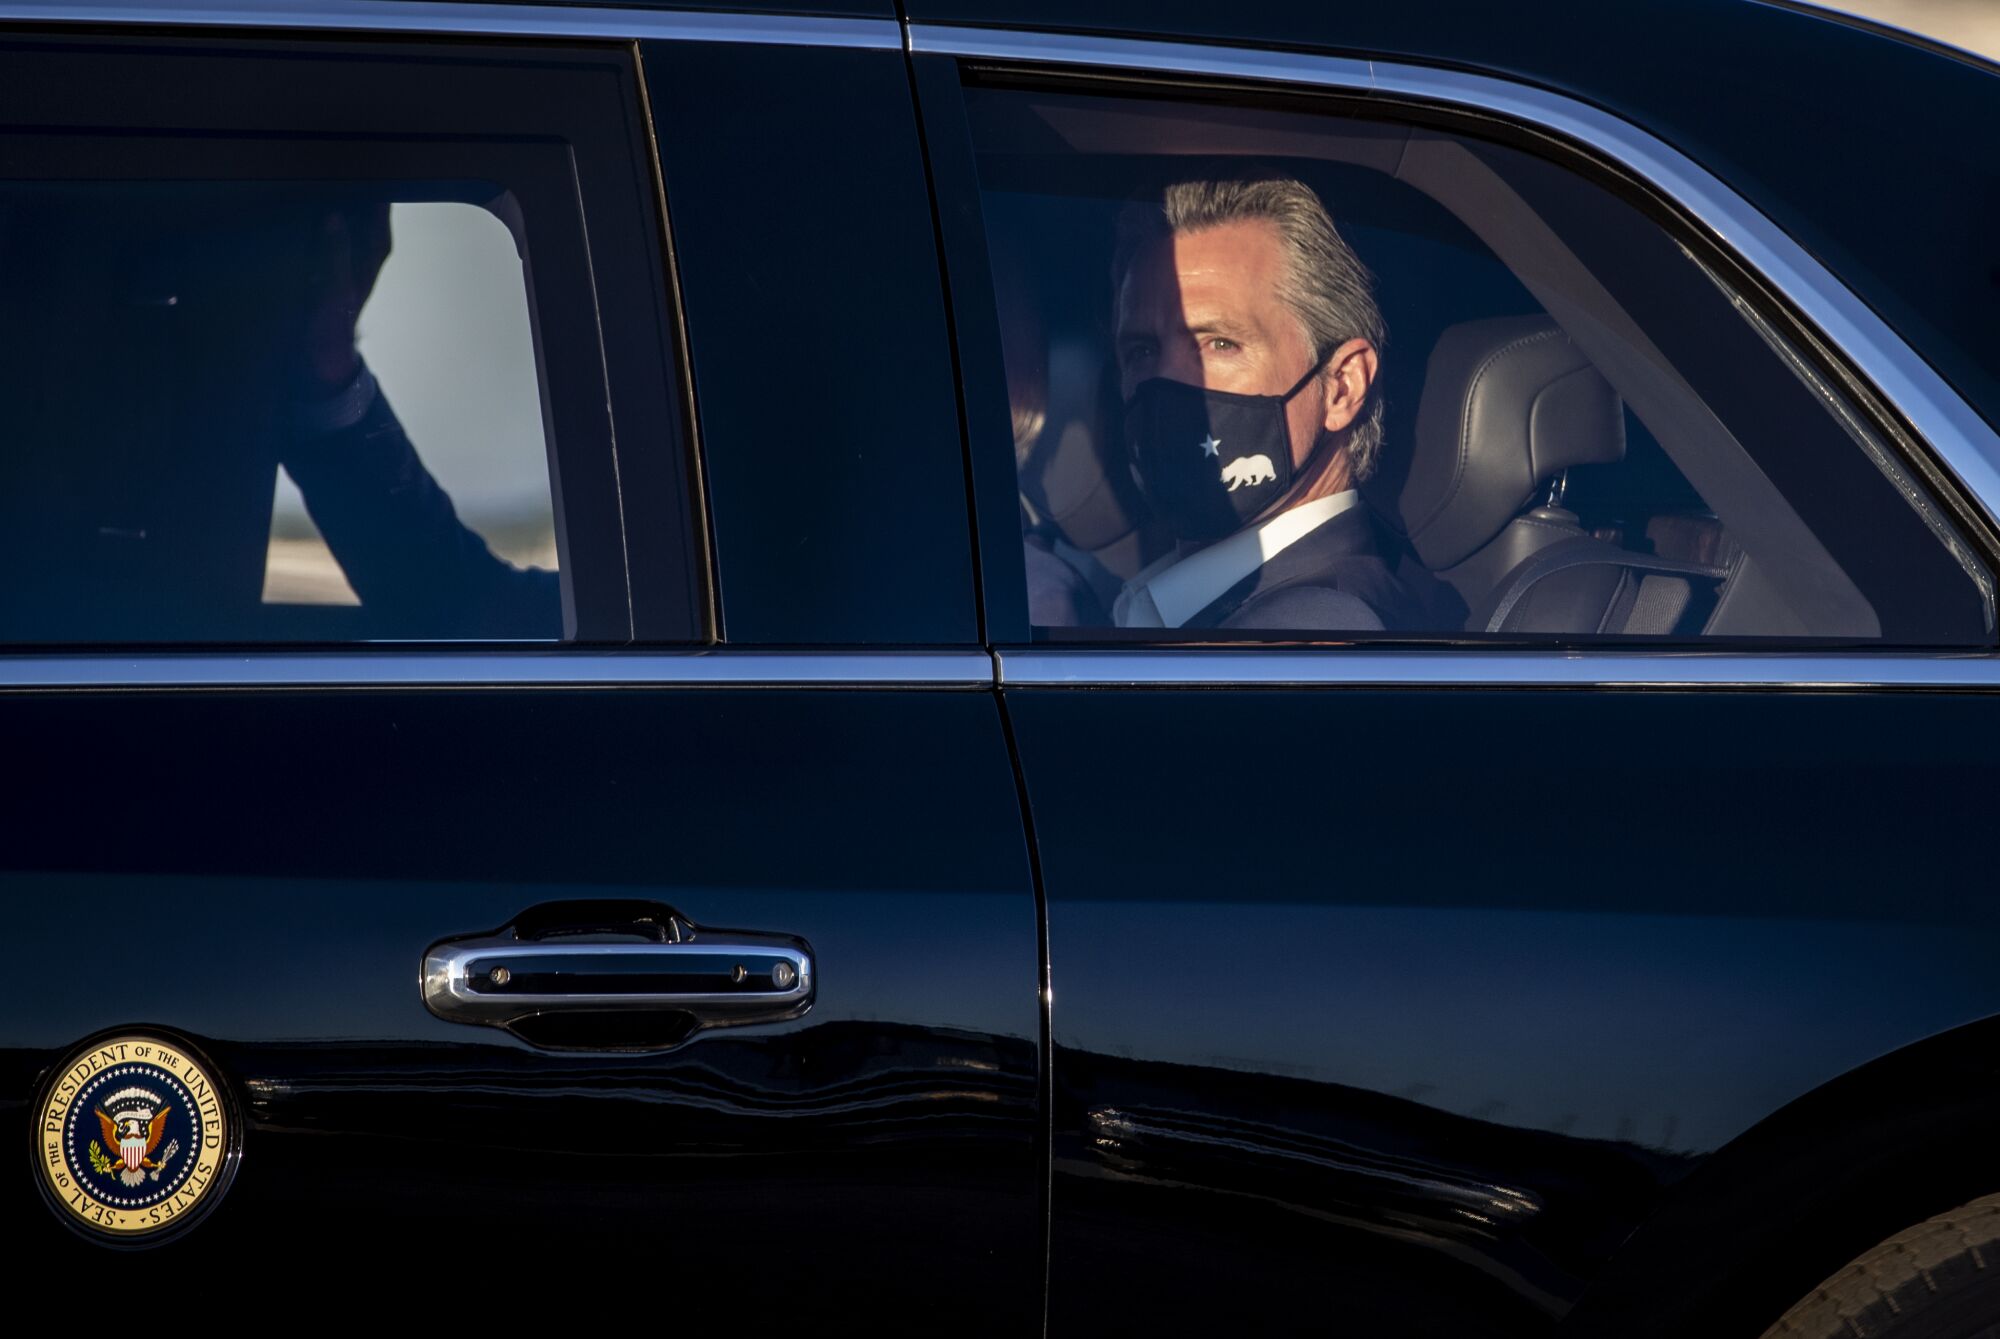 California Gov. Gavin Newsom joins President Biden in his motorcade.